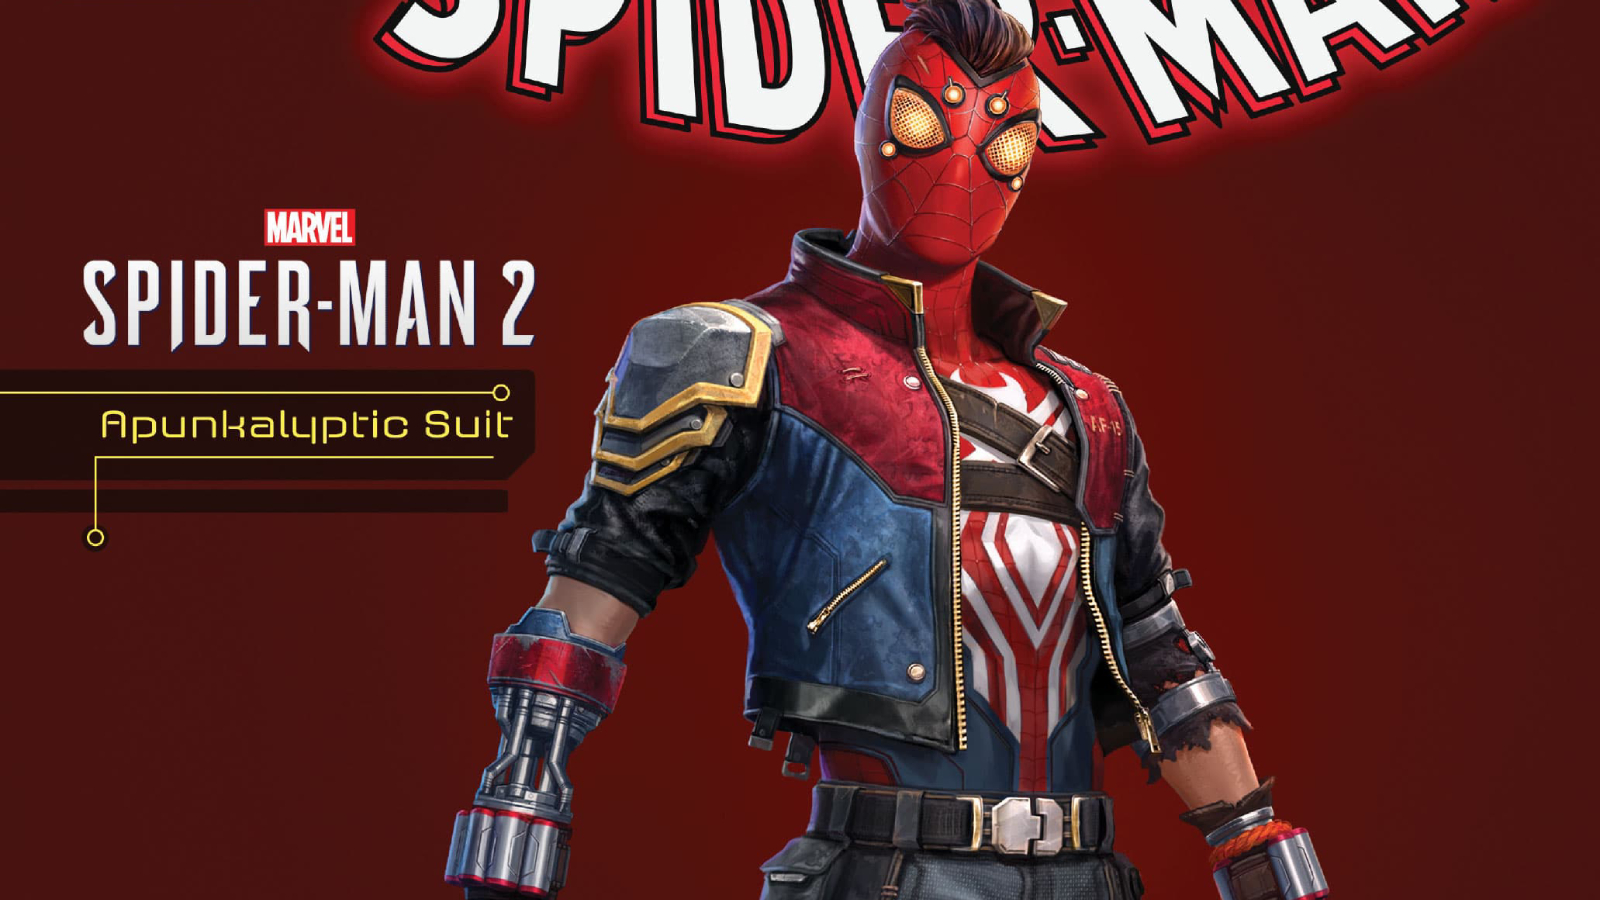 Miles Morales: Spider-Man (2018) #39